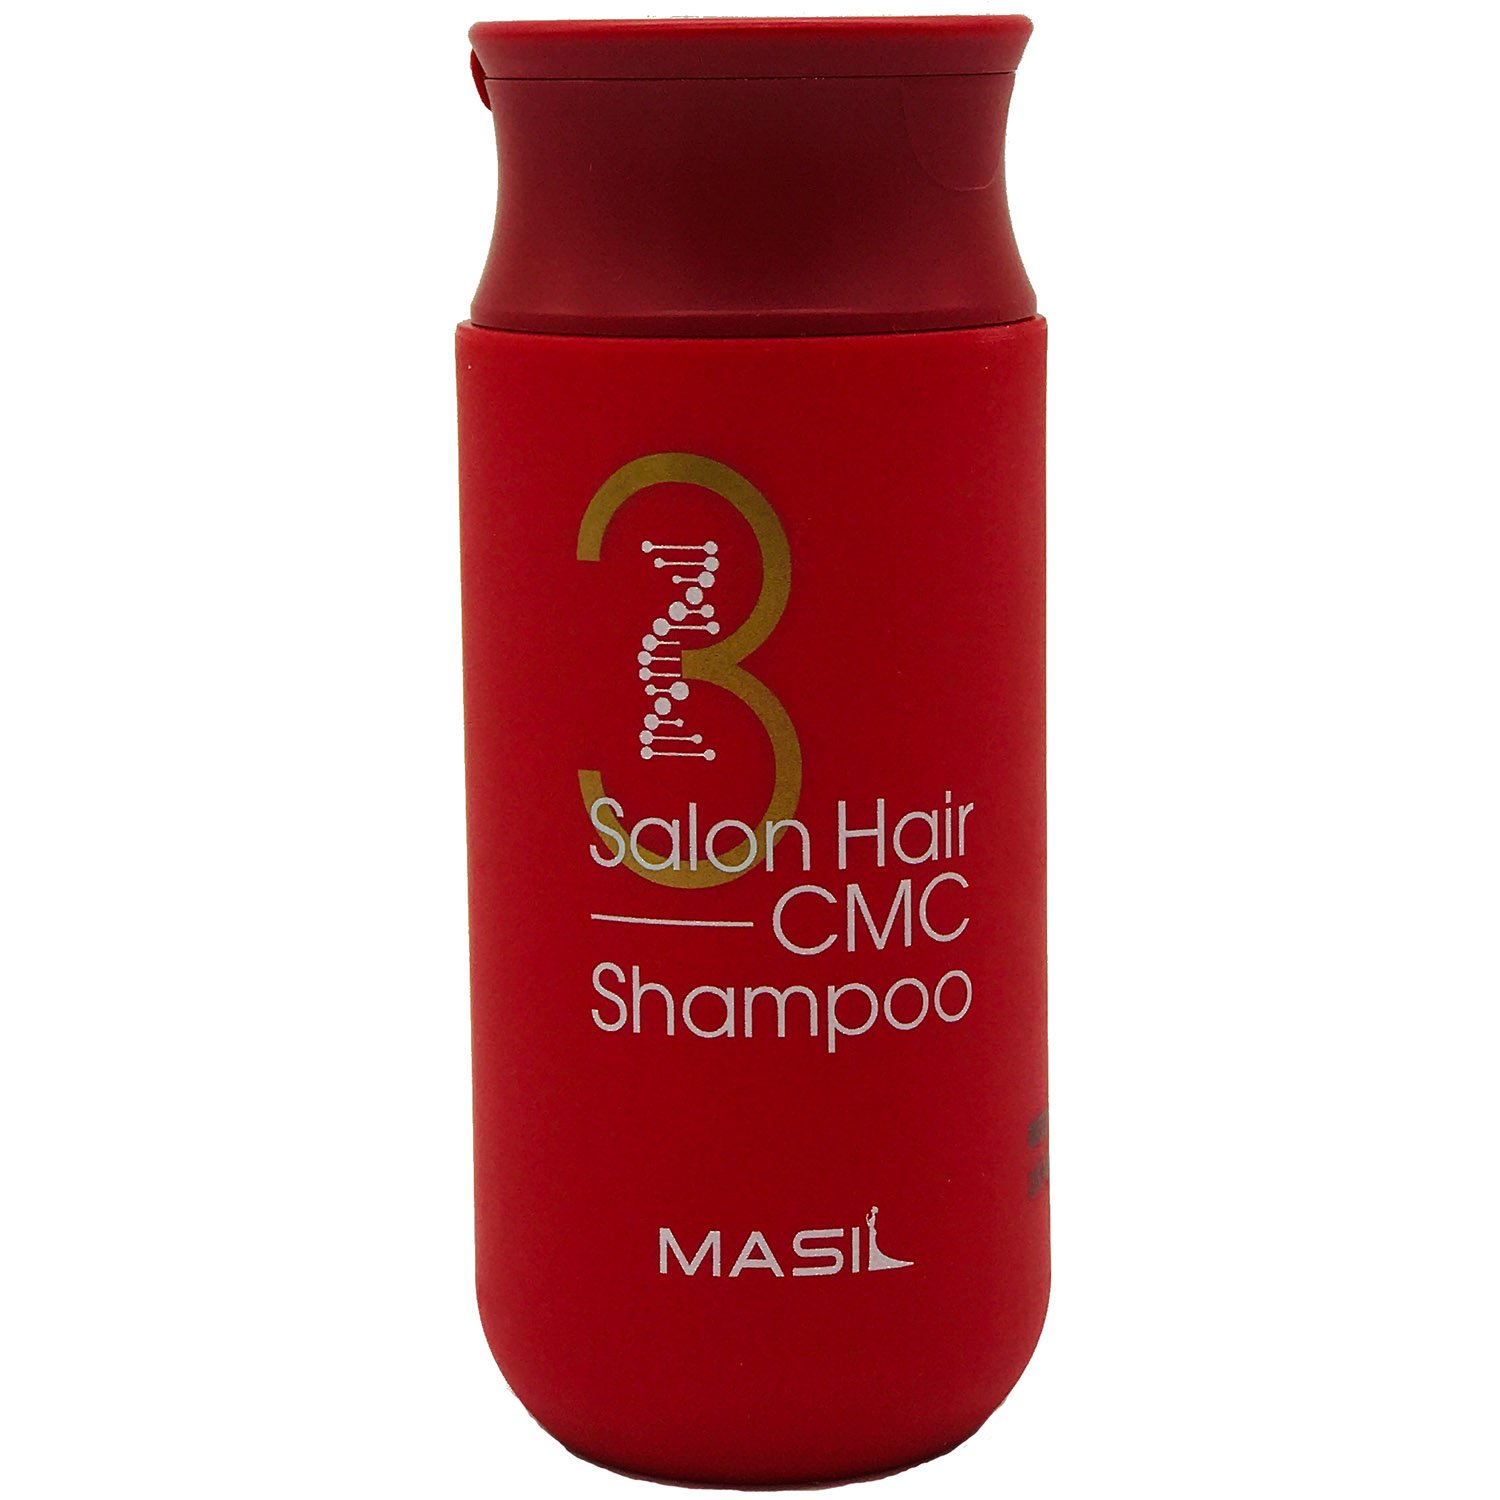 Очищающий шампунь для волос Masil 3 Salon Hair CMC Shampoo, с аминокислотами, 150 мл - фото 1